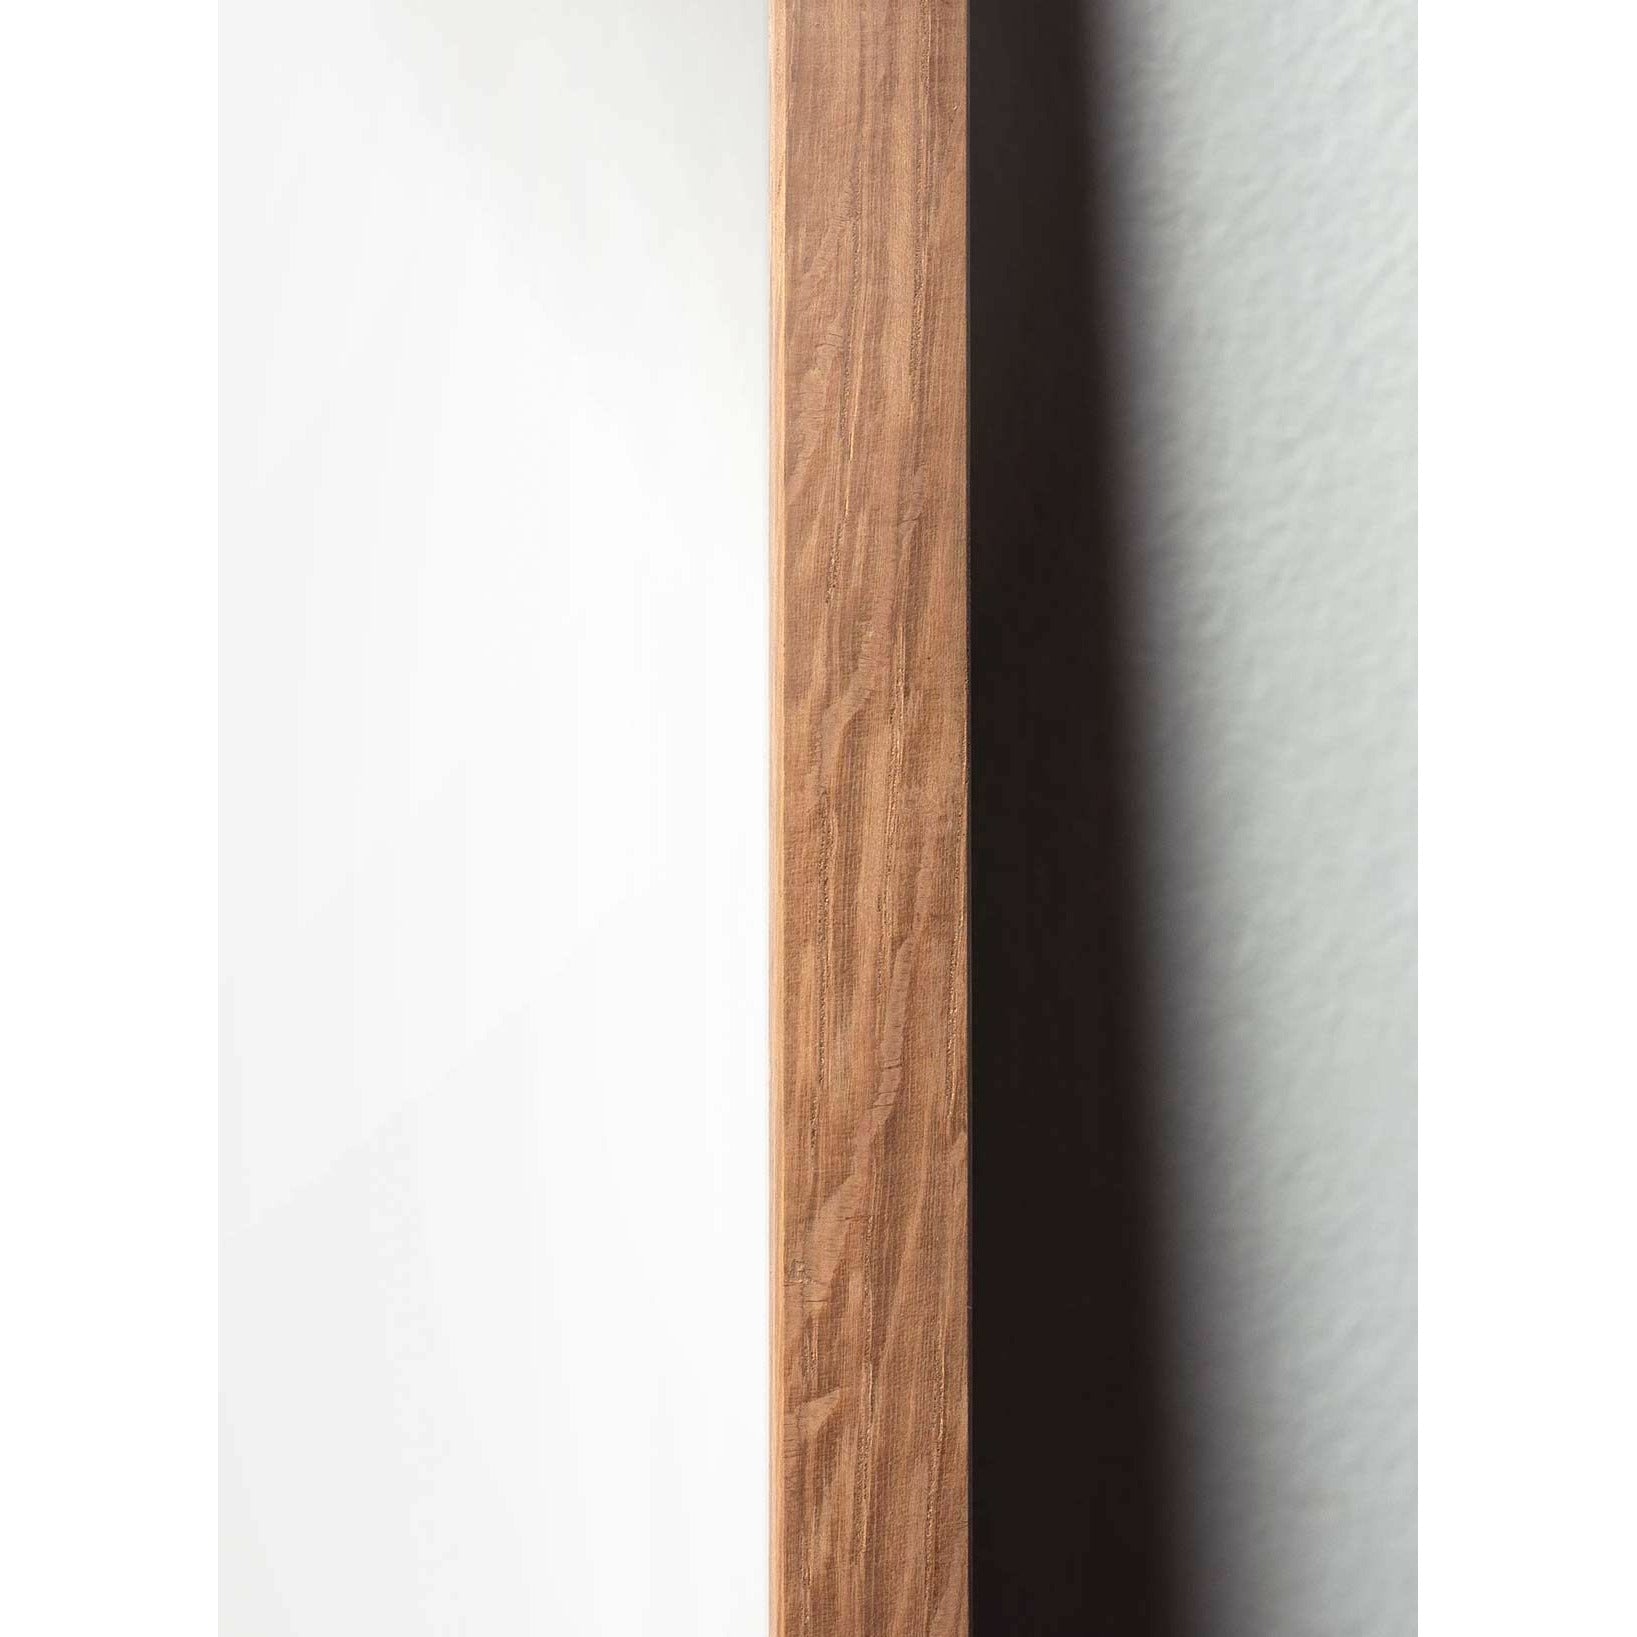 Póster clásico de Snowdrop de creación, marco hecho de madera clara de 70x100 cm, fondo verde